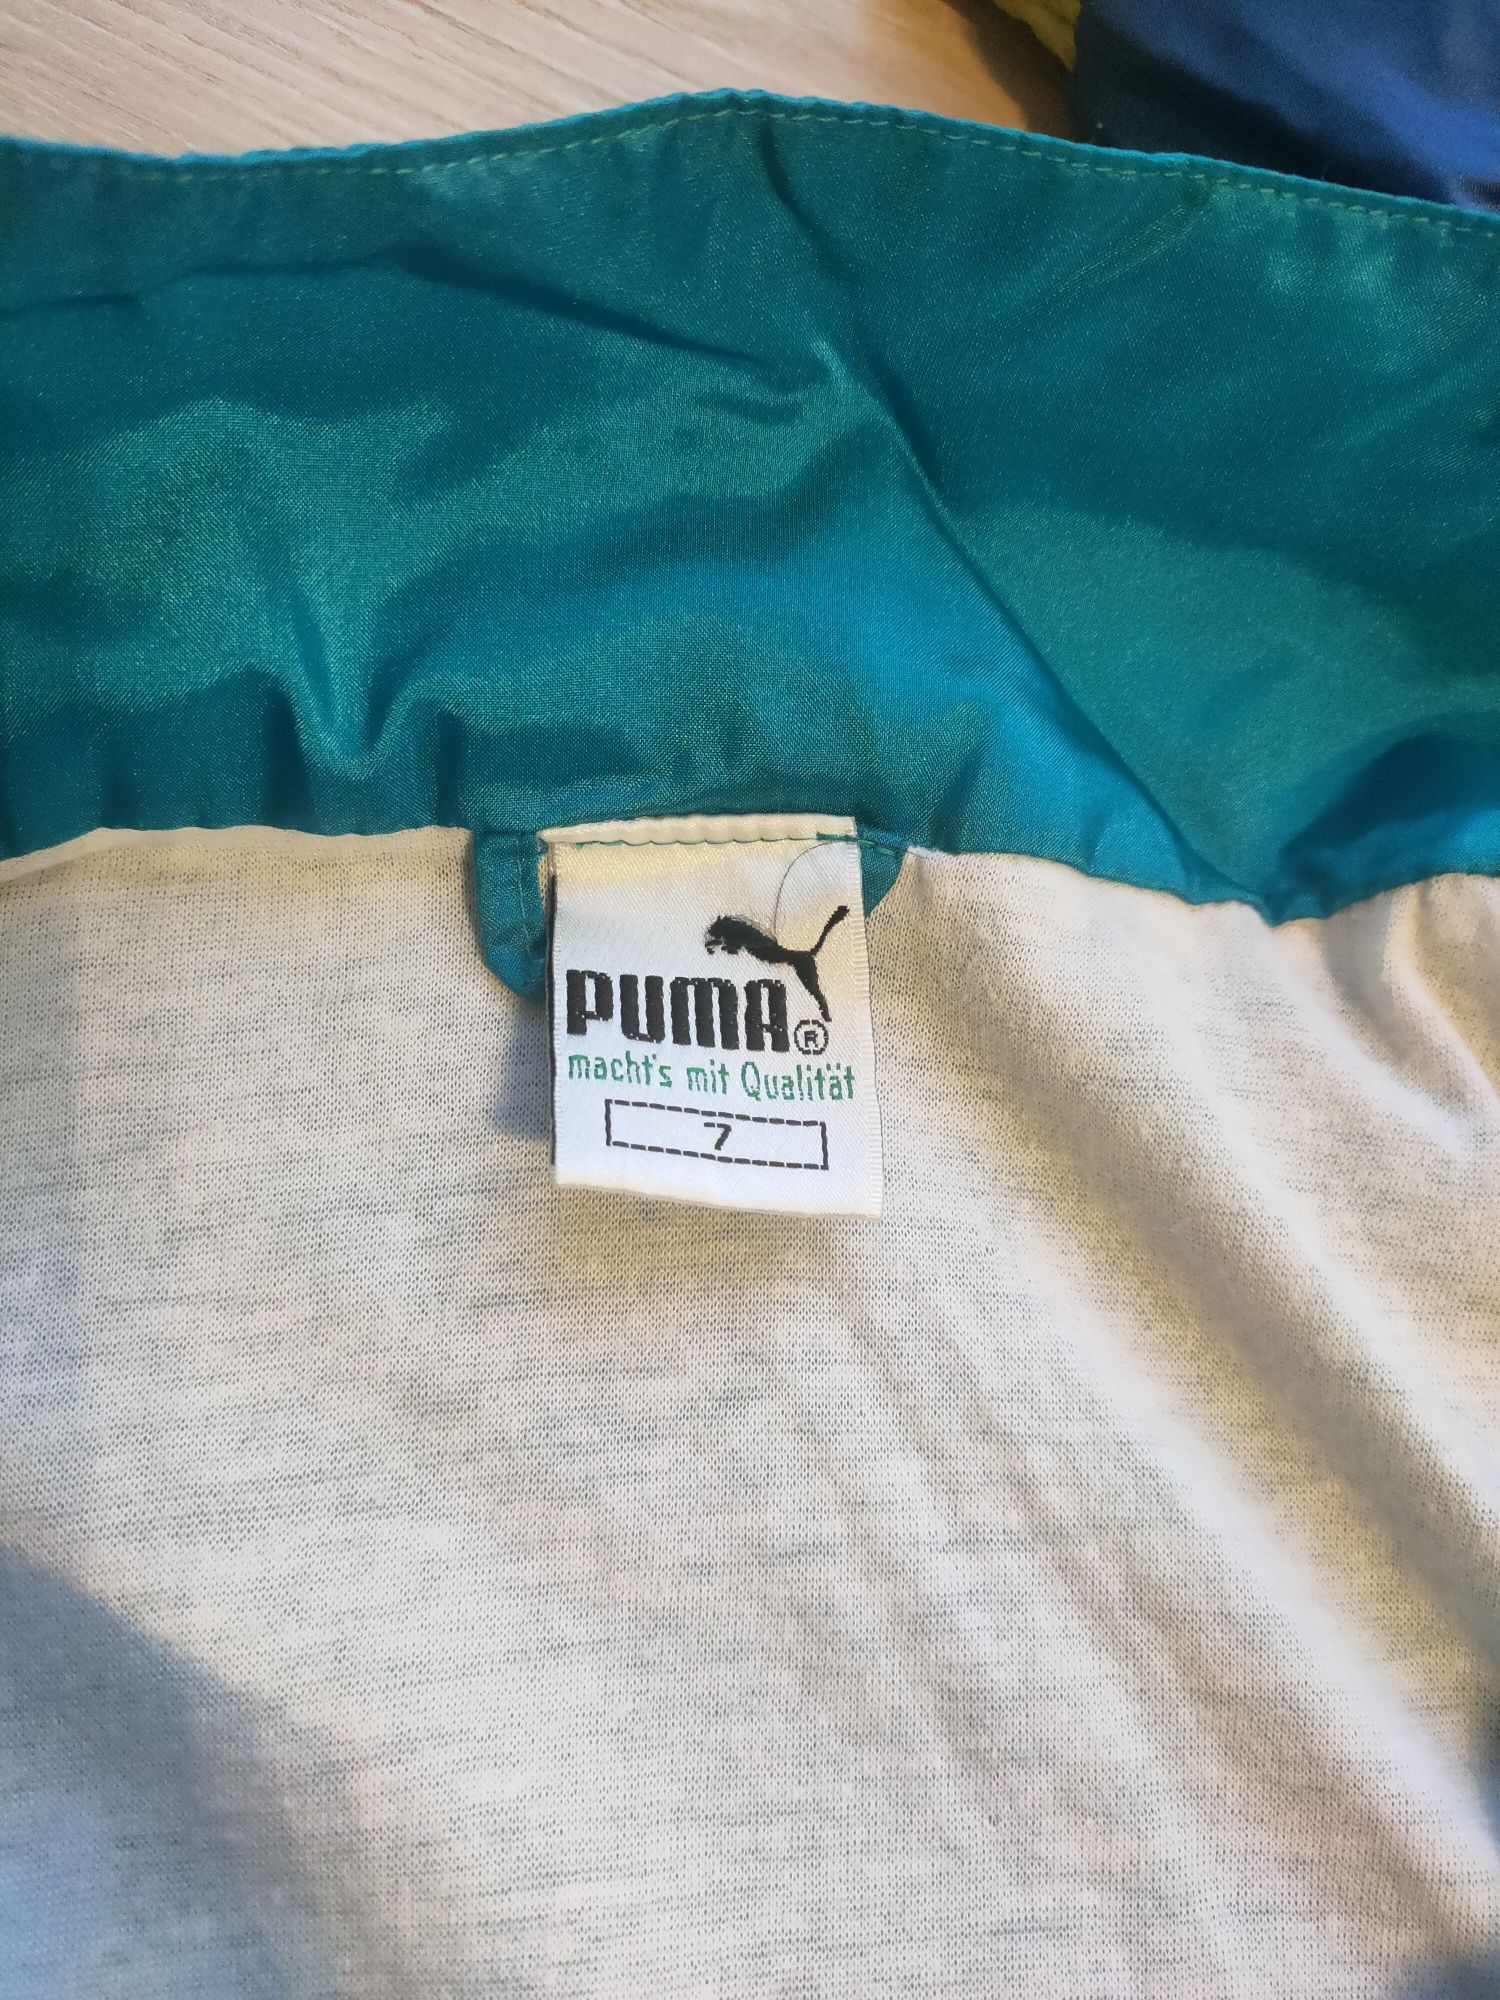 Puma bluza rozpinana sportowa kolorowa r.L vintage